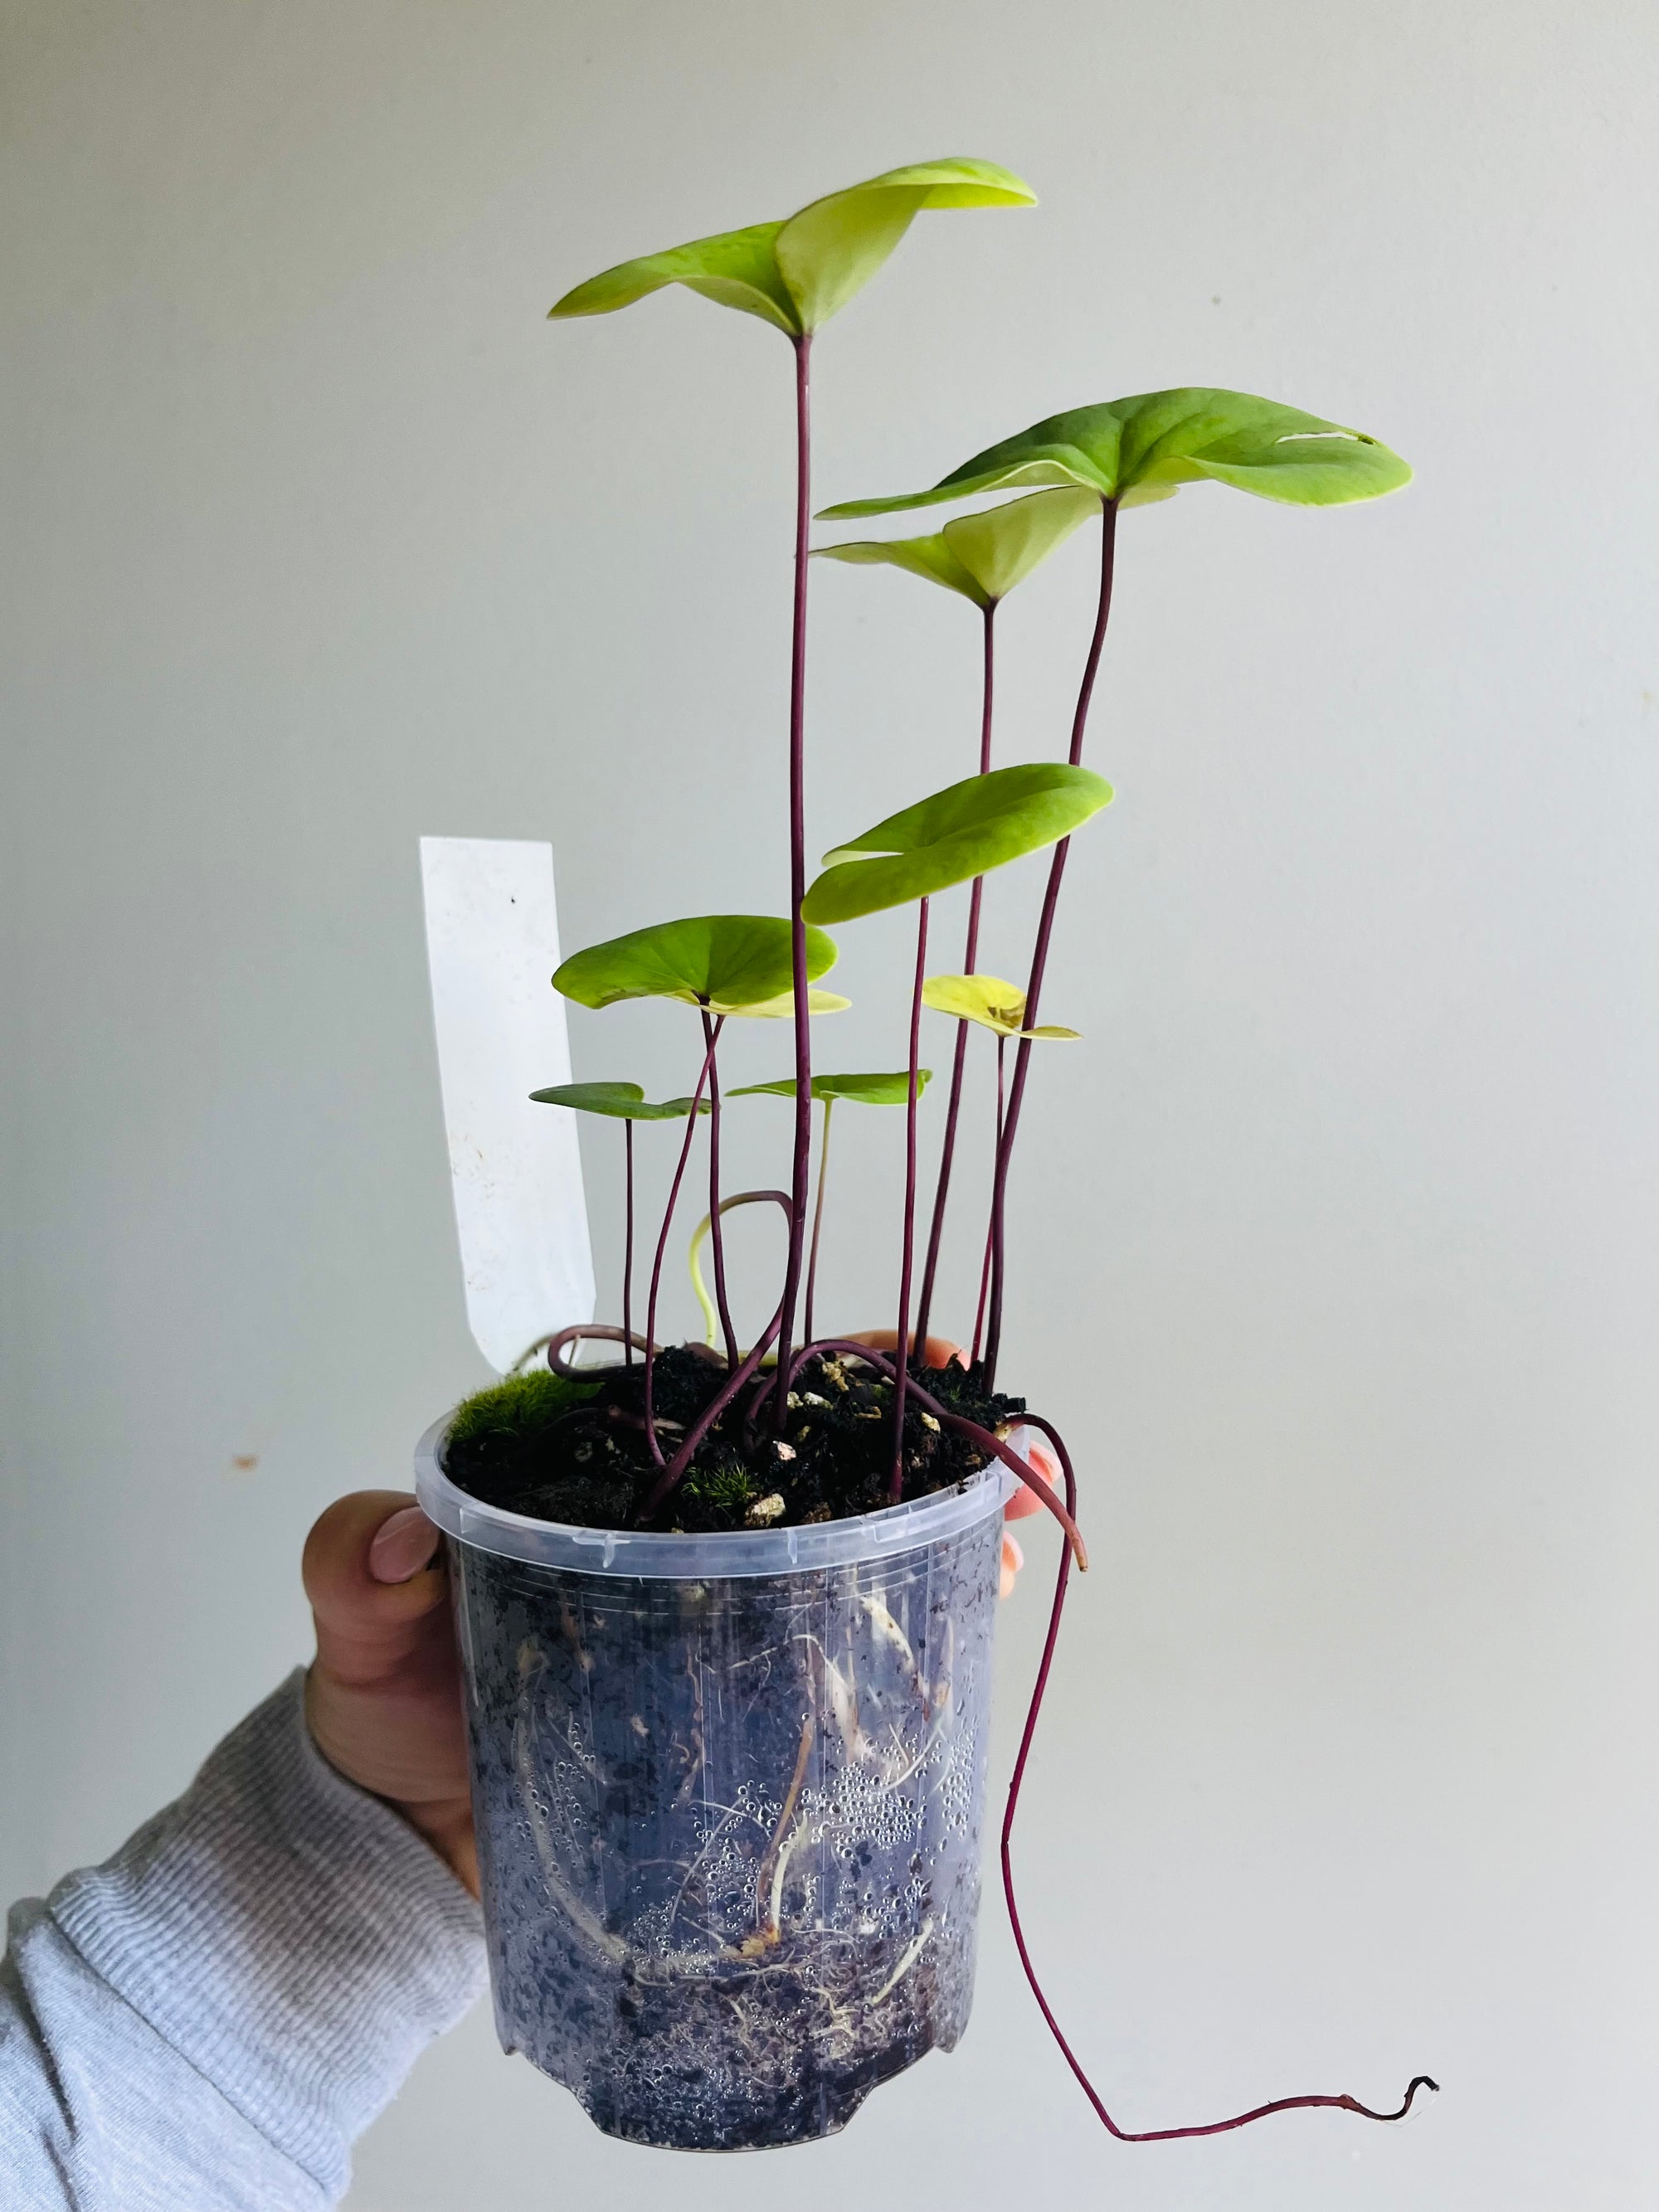 Utricularia Cornigera - Bladderwort